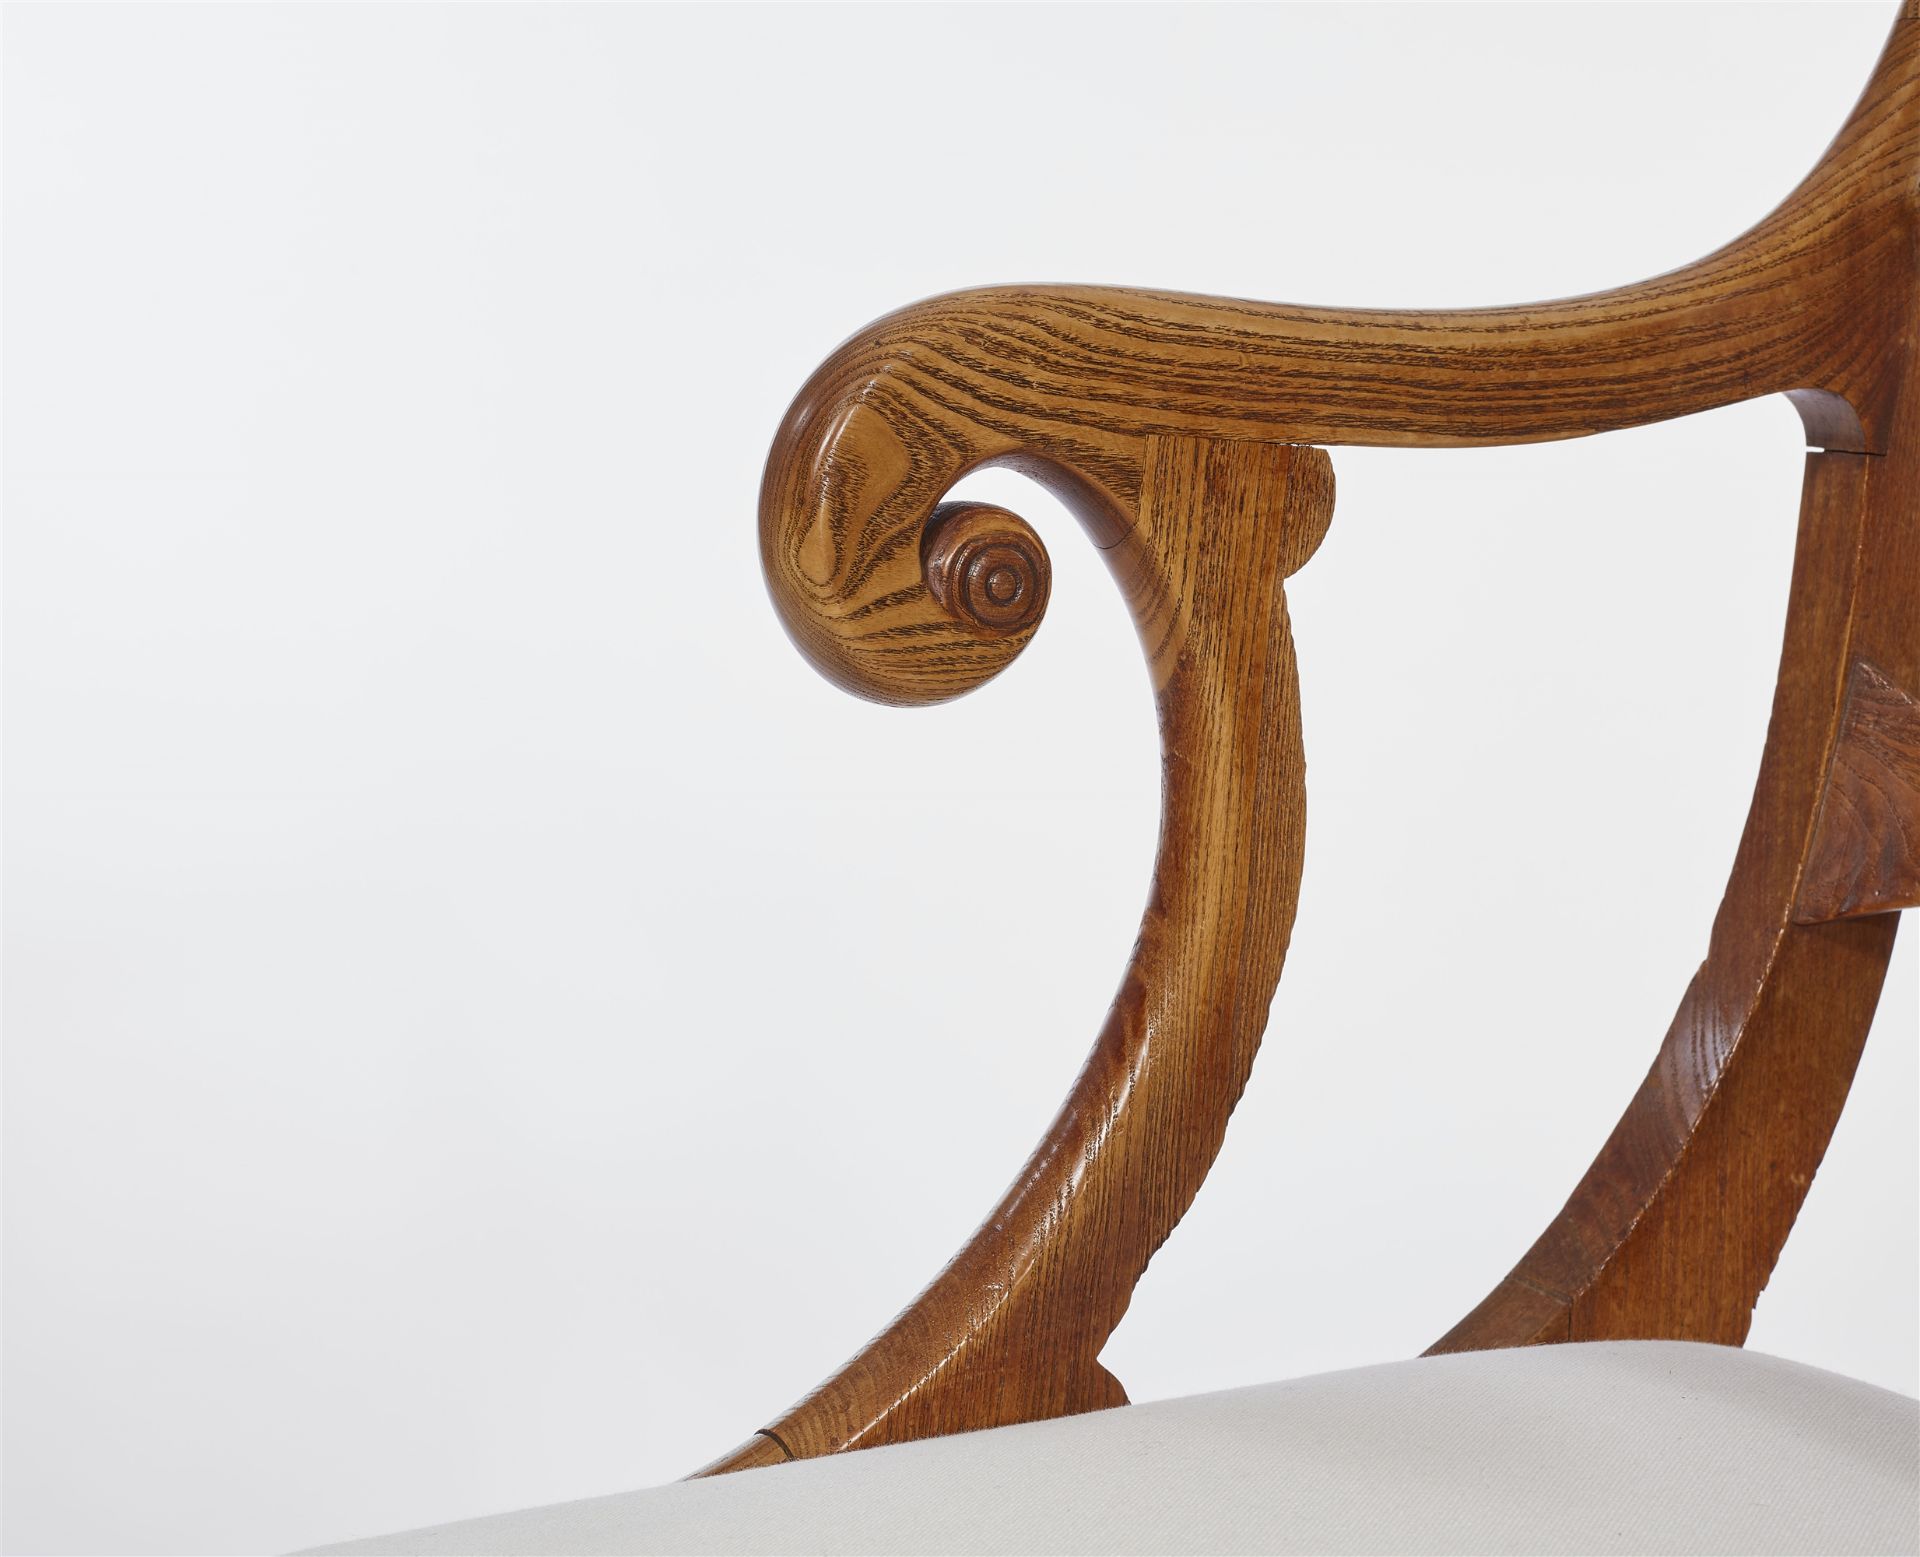 An armchair after a design by Karl Friedrich Schinkel - Image 5 of 6